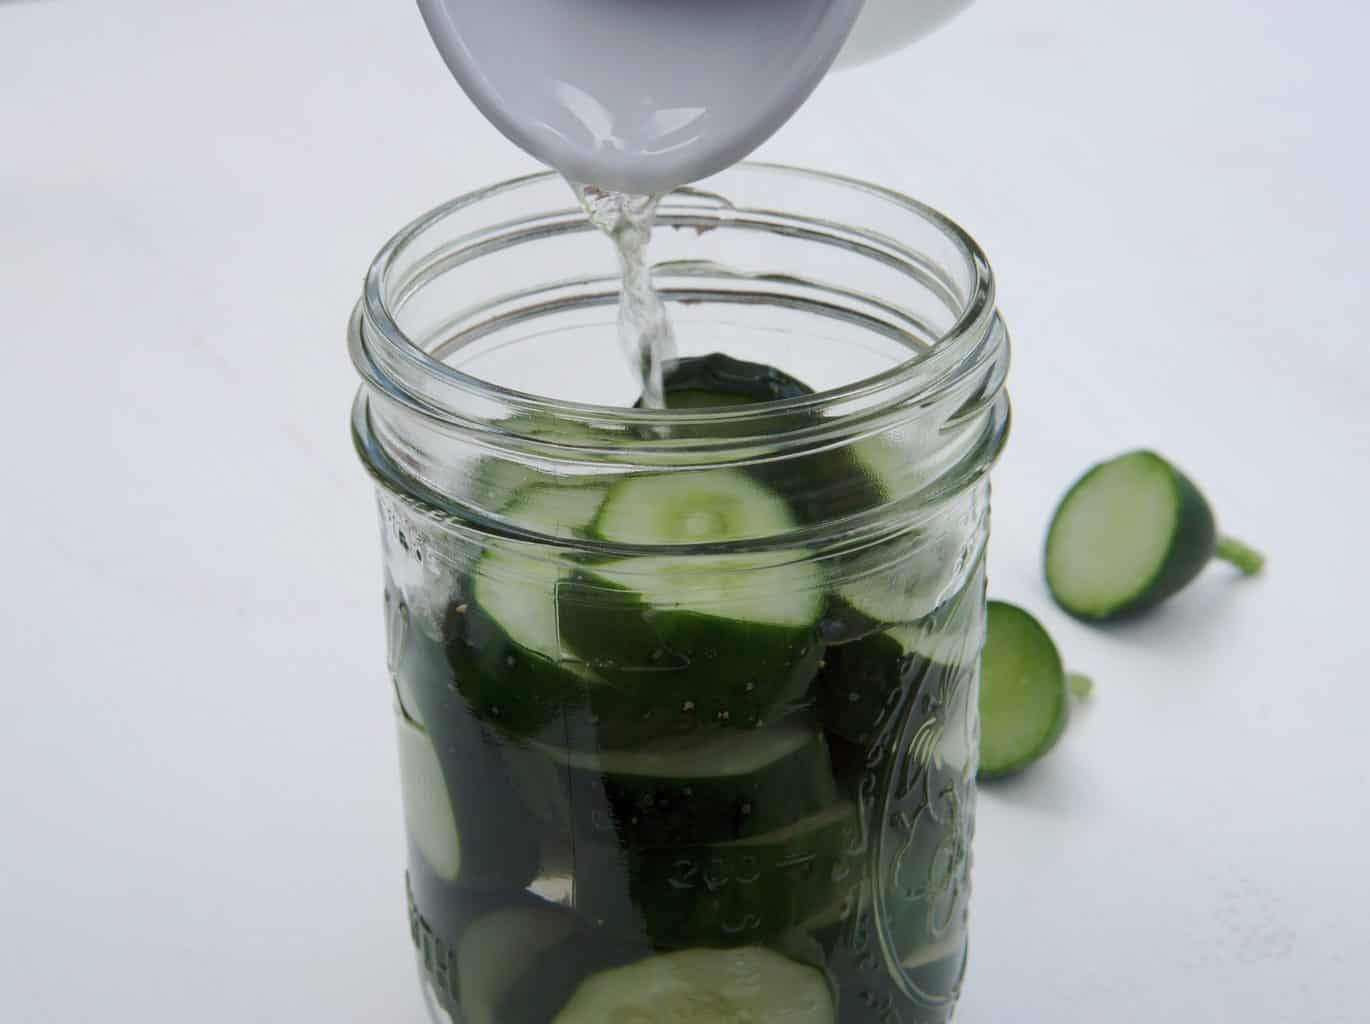 Homemade fermented cucumber pickles